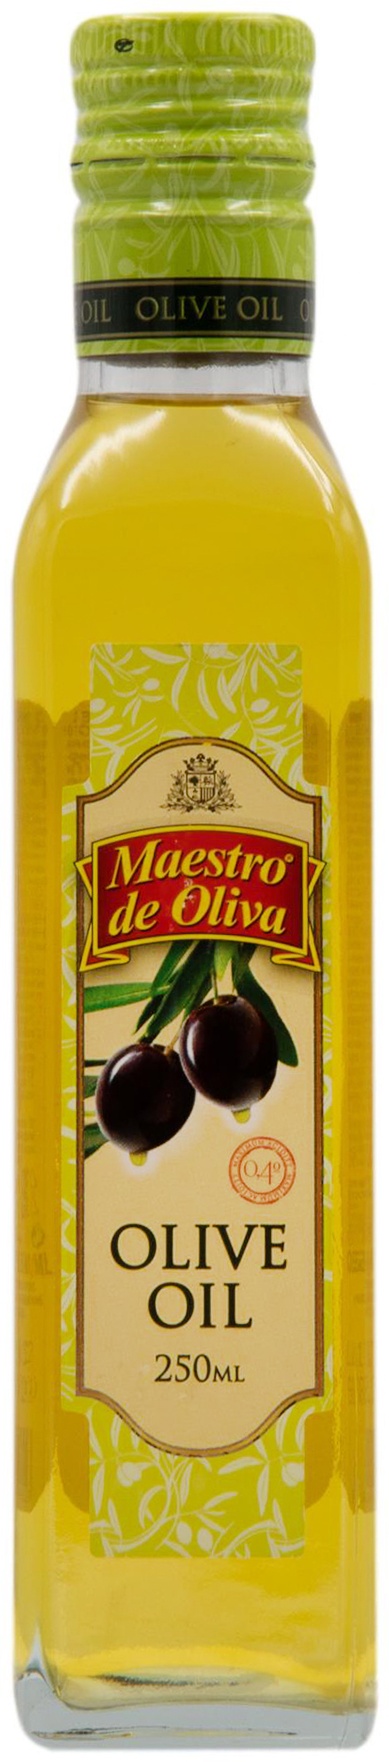 Maestro de Oliva оливковое масло. Масло оливковое рафинированное. Масло маэстро де олива железные банки. Маэстро де олива оливковое масло где указана кислотность.